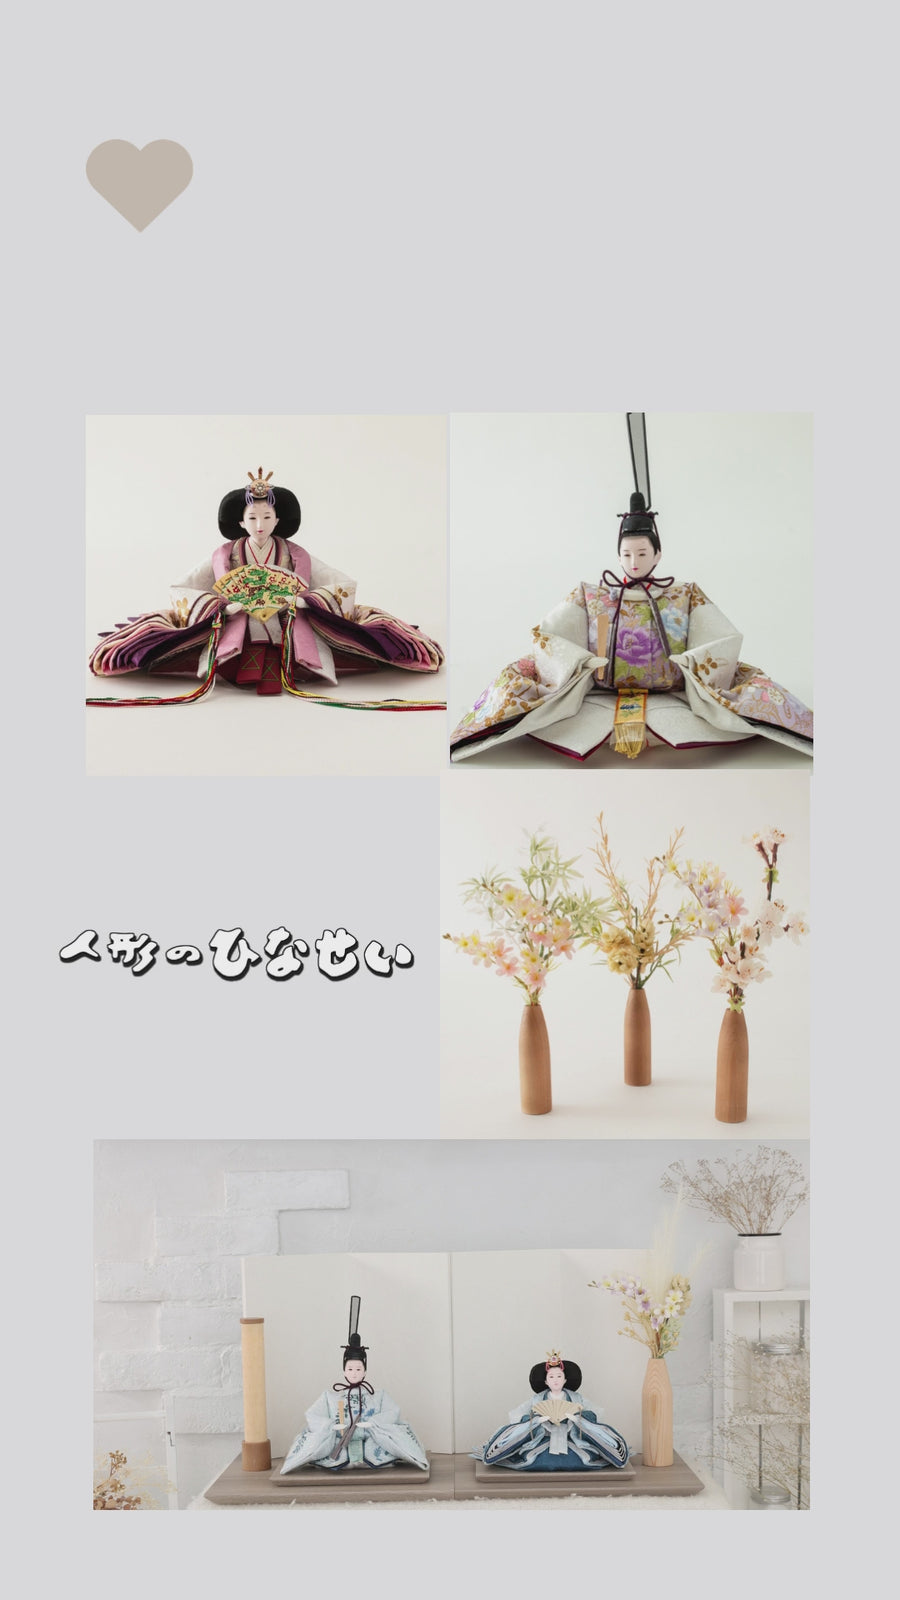 C 雛人形 雛飾りの花飾りアレンジフラワー 新しい装飾 オブジェ桜橘 No,1